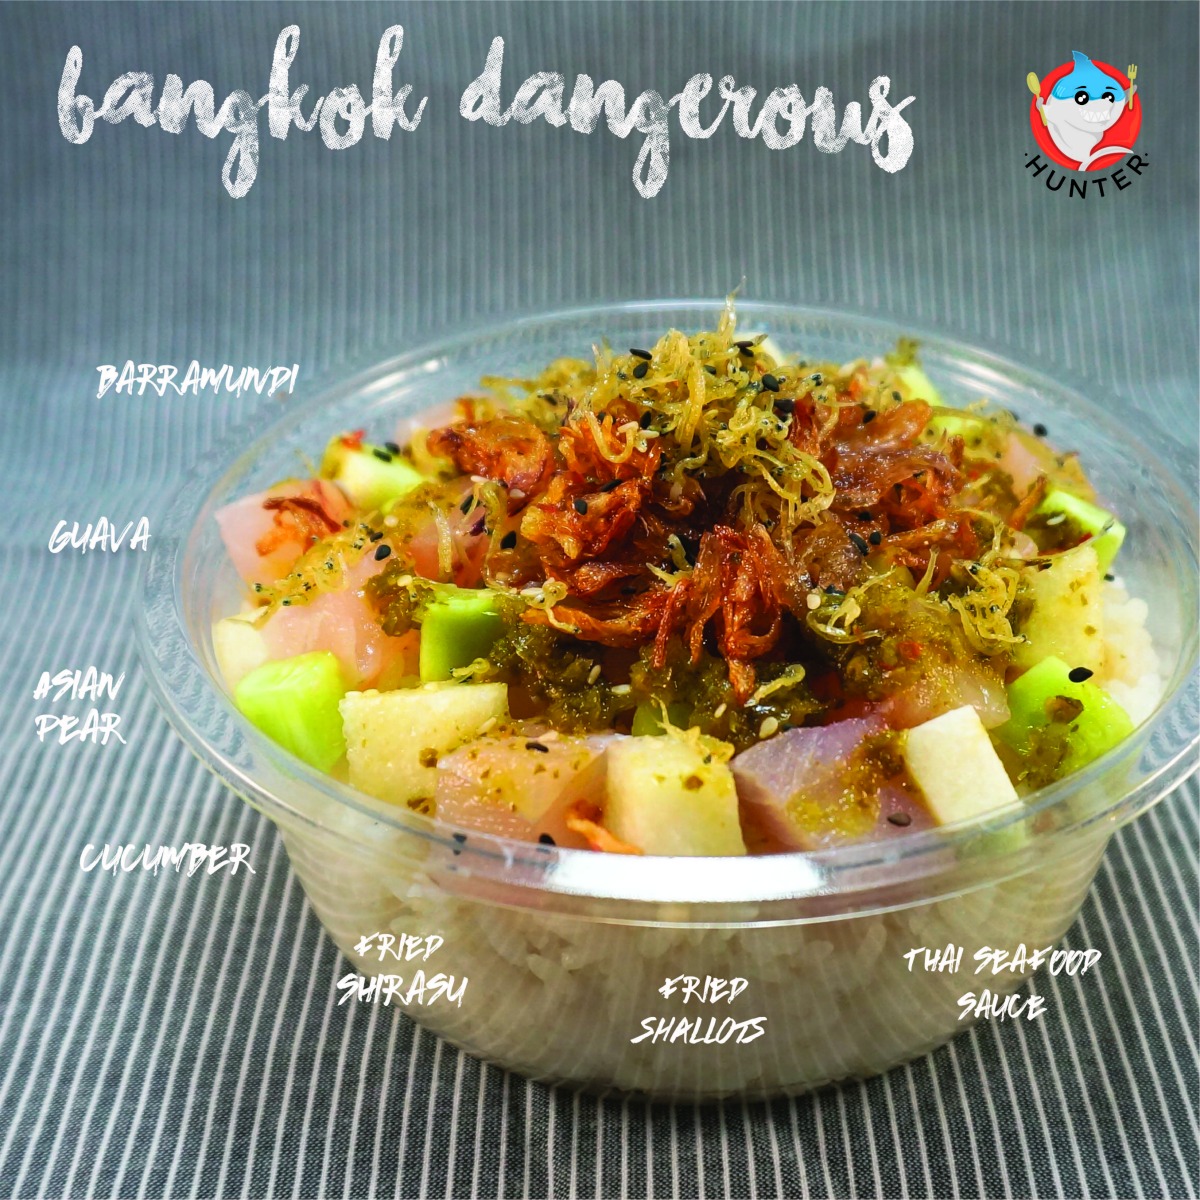 The Bangkok Dangerous Bowl